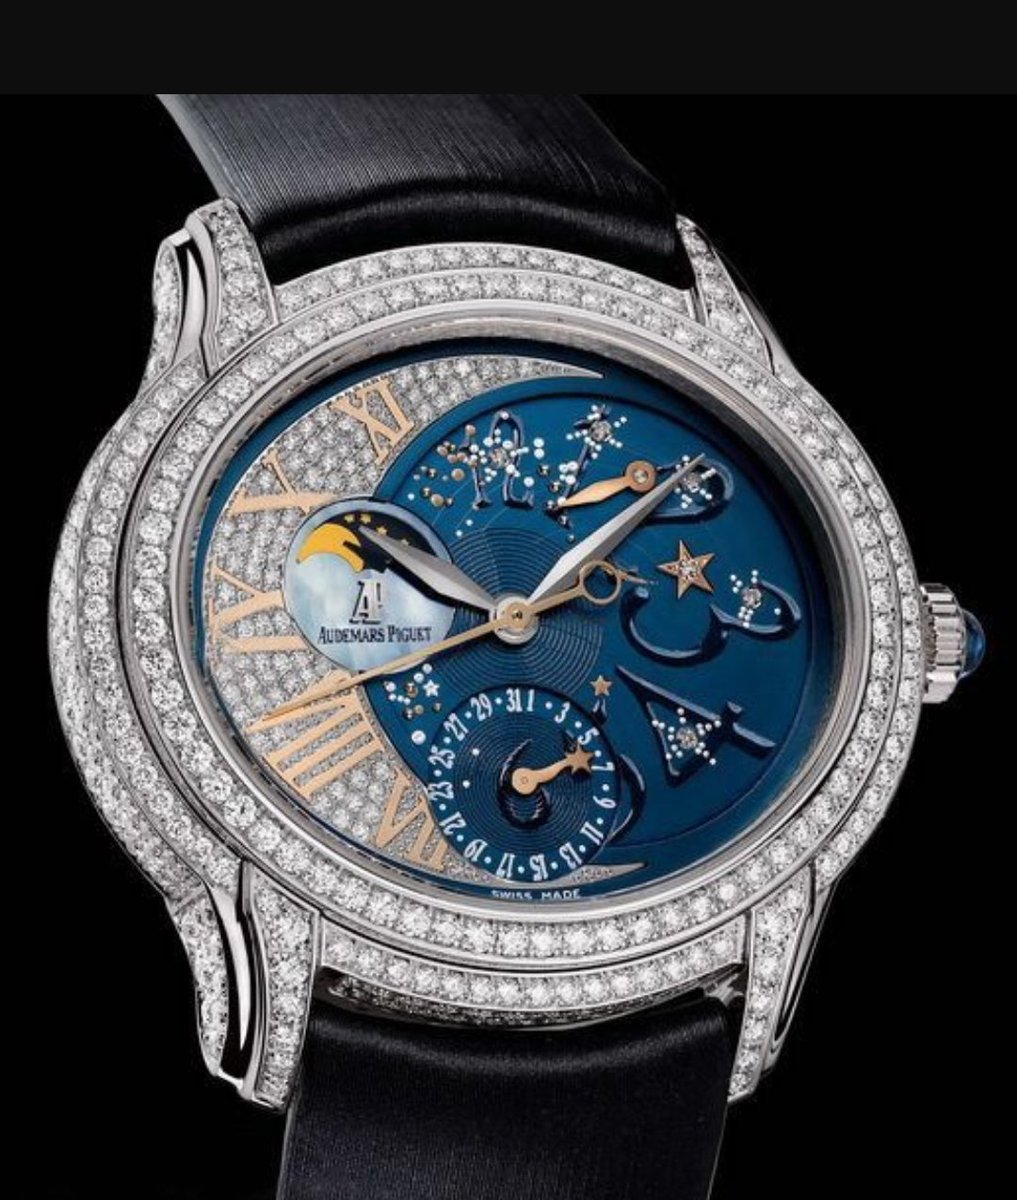 Сапфировые часы наручные. Часы Patek Philippe с бриллиантами. Patek Philippe часы мужские. Chopard часы Moonphase. Patek Philippe Audemars Piguet.